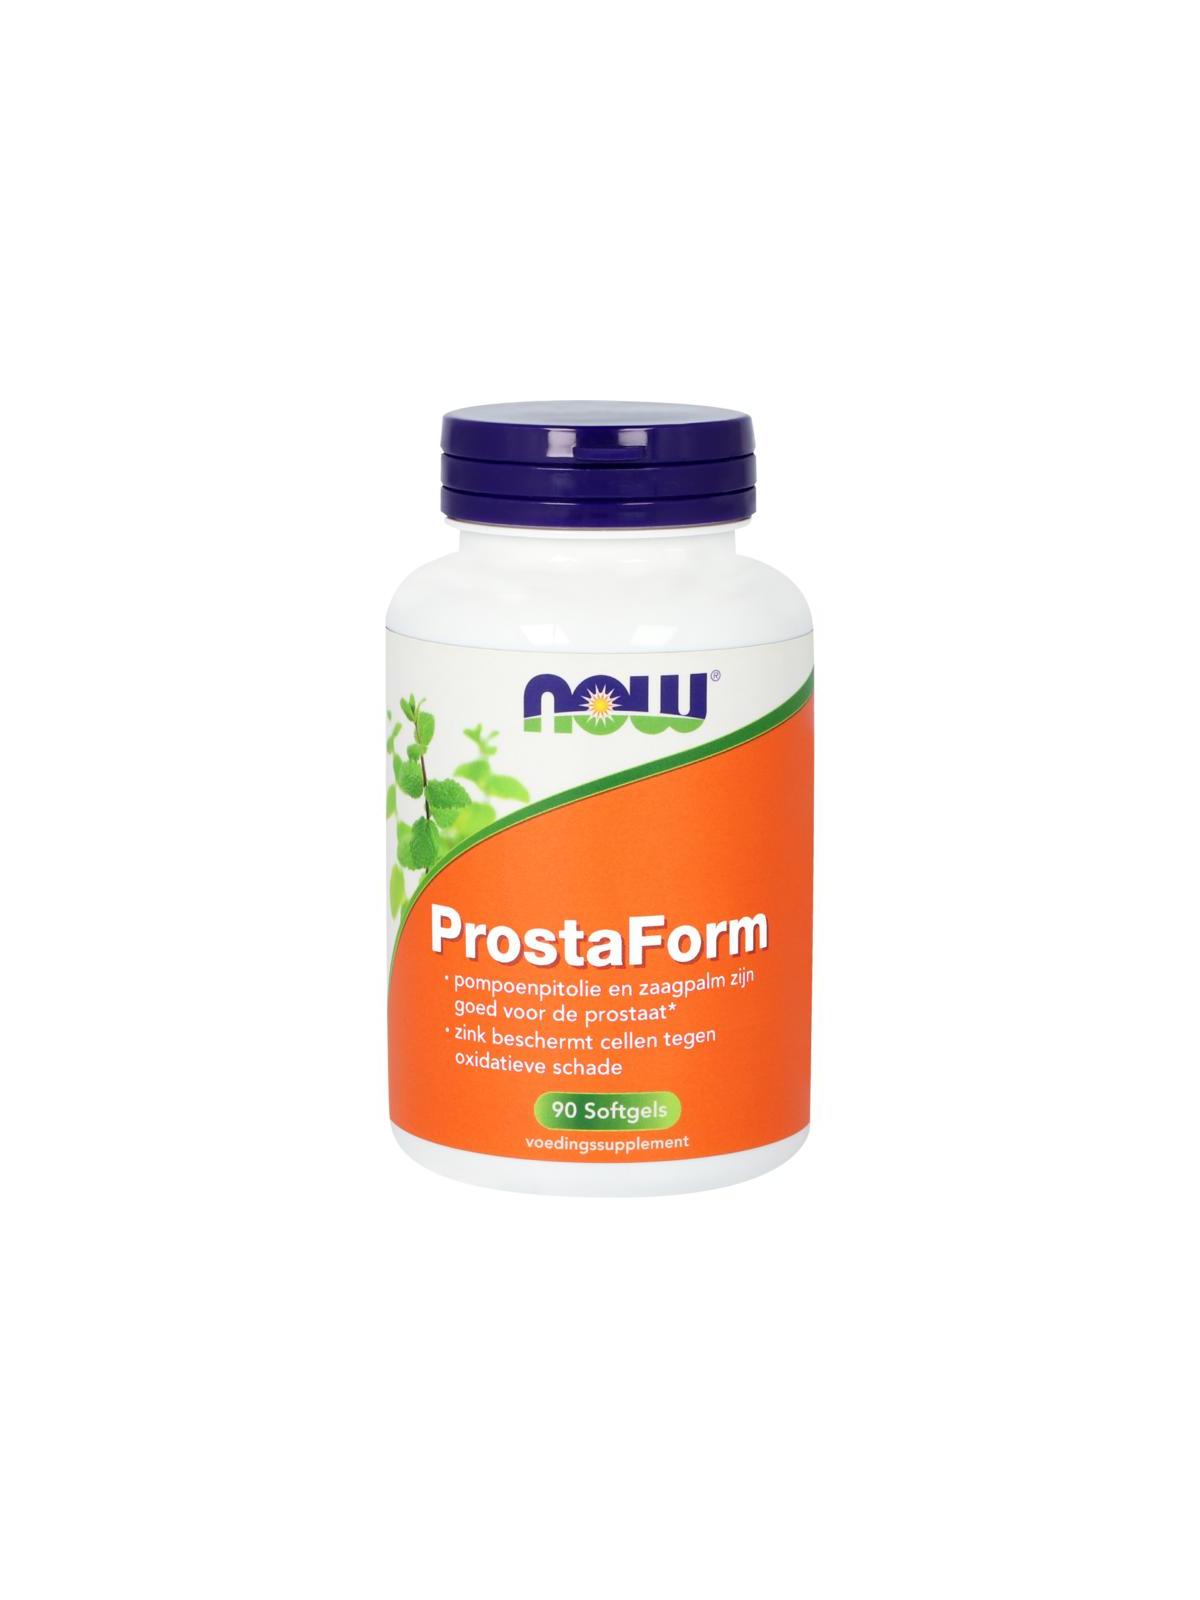 Prostaat formule bio